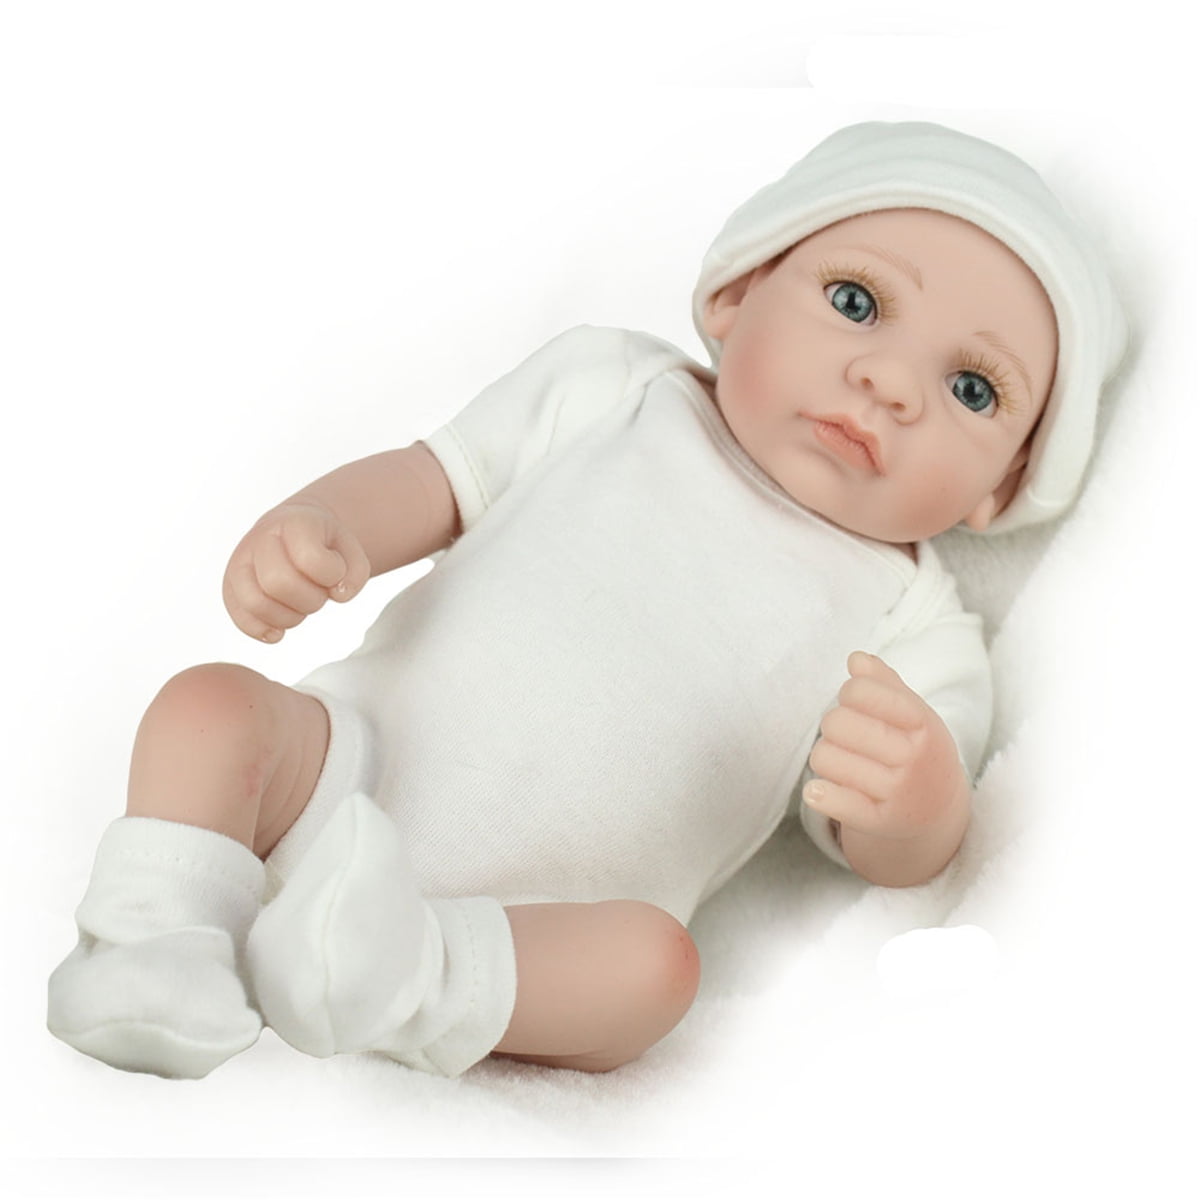 10" MINI Baby Dolls BOY Reborn Vinyl Soft Silicone Newborn Doll US SELLER 